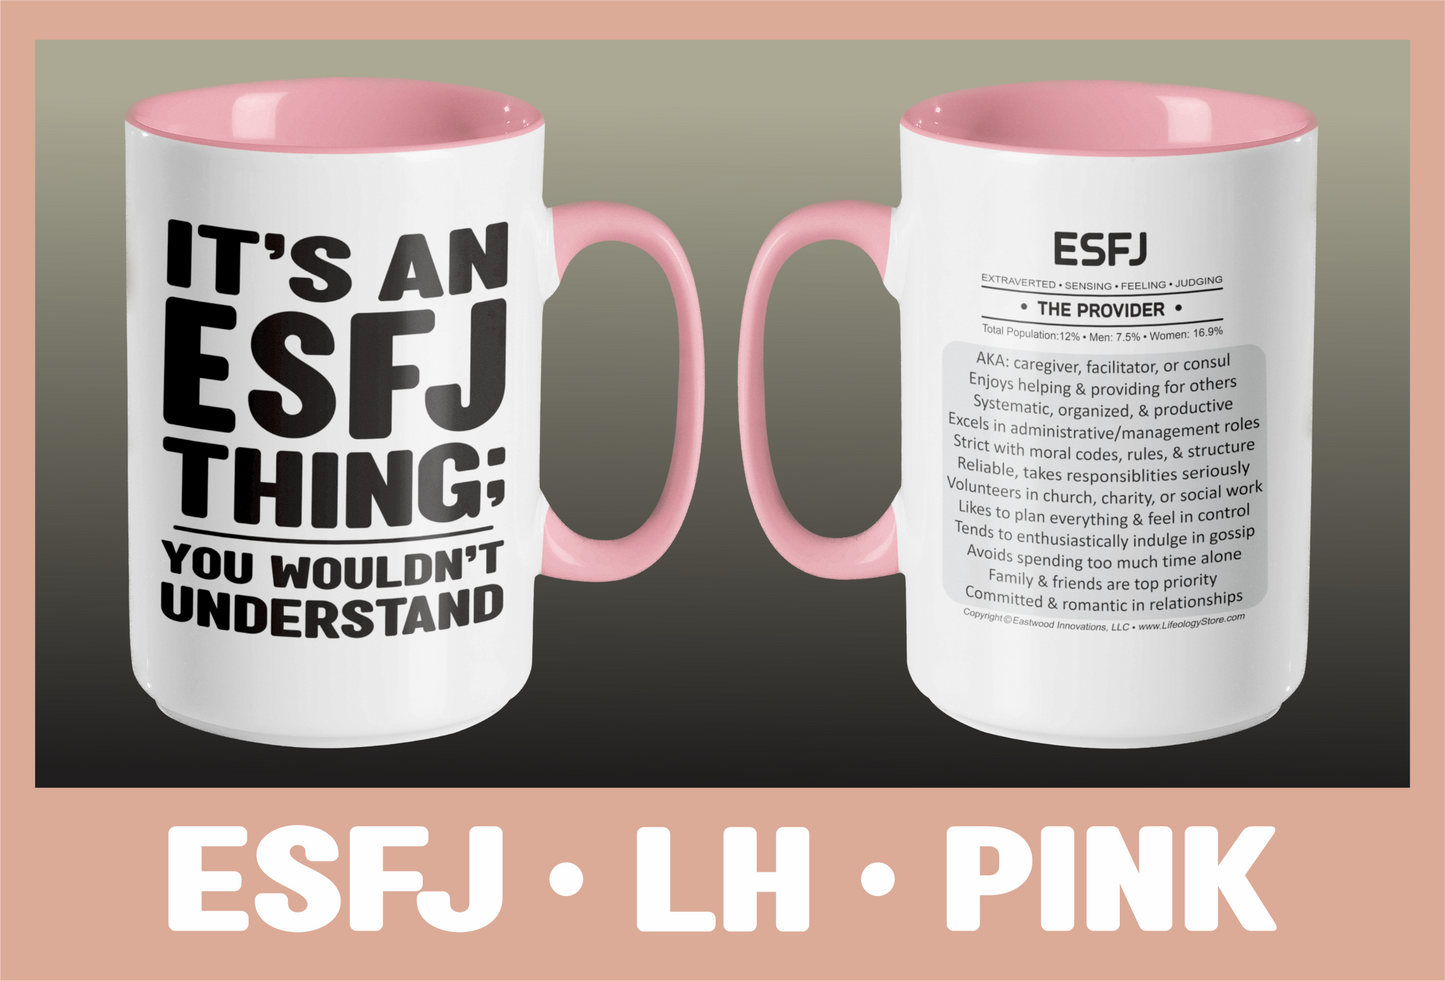 Typology Mug • ESFJ • LH